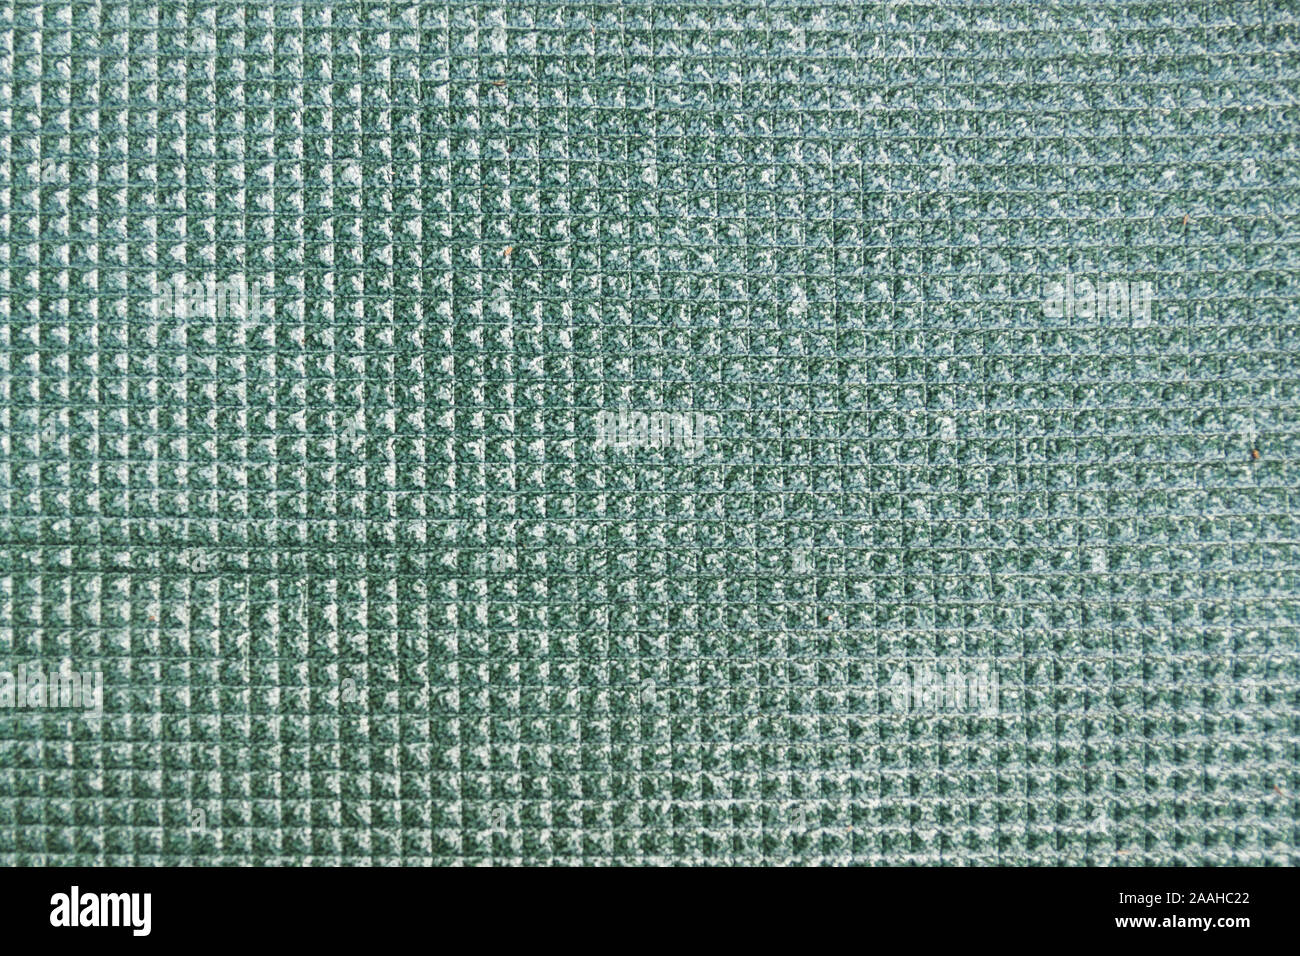 Green travel foam mat, flat background photo texture Stock Photo